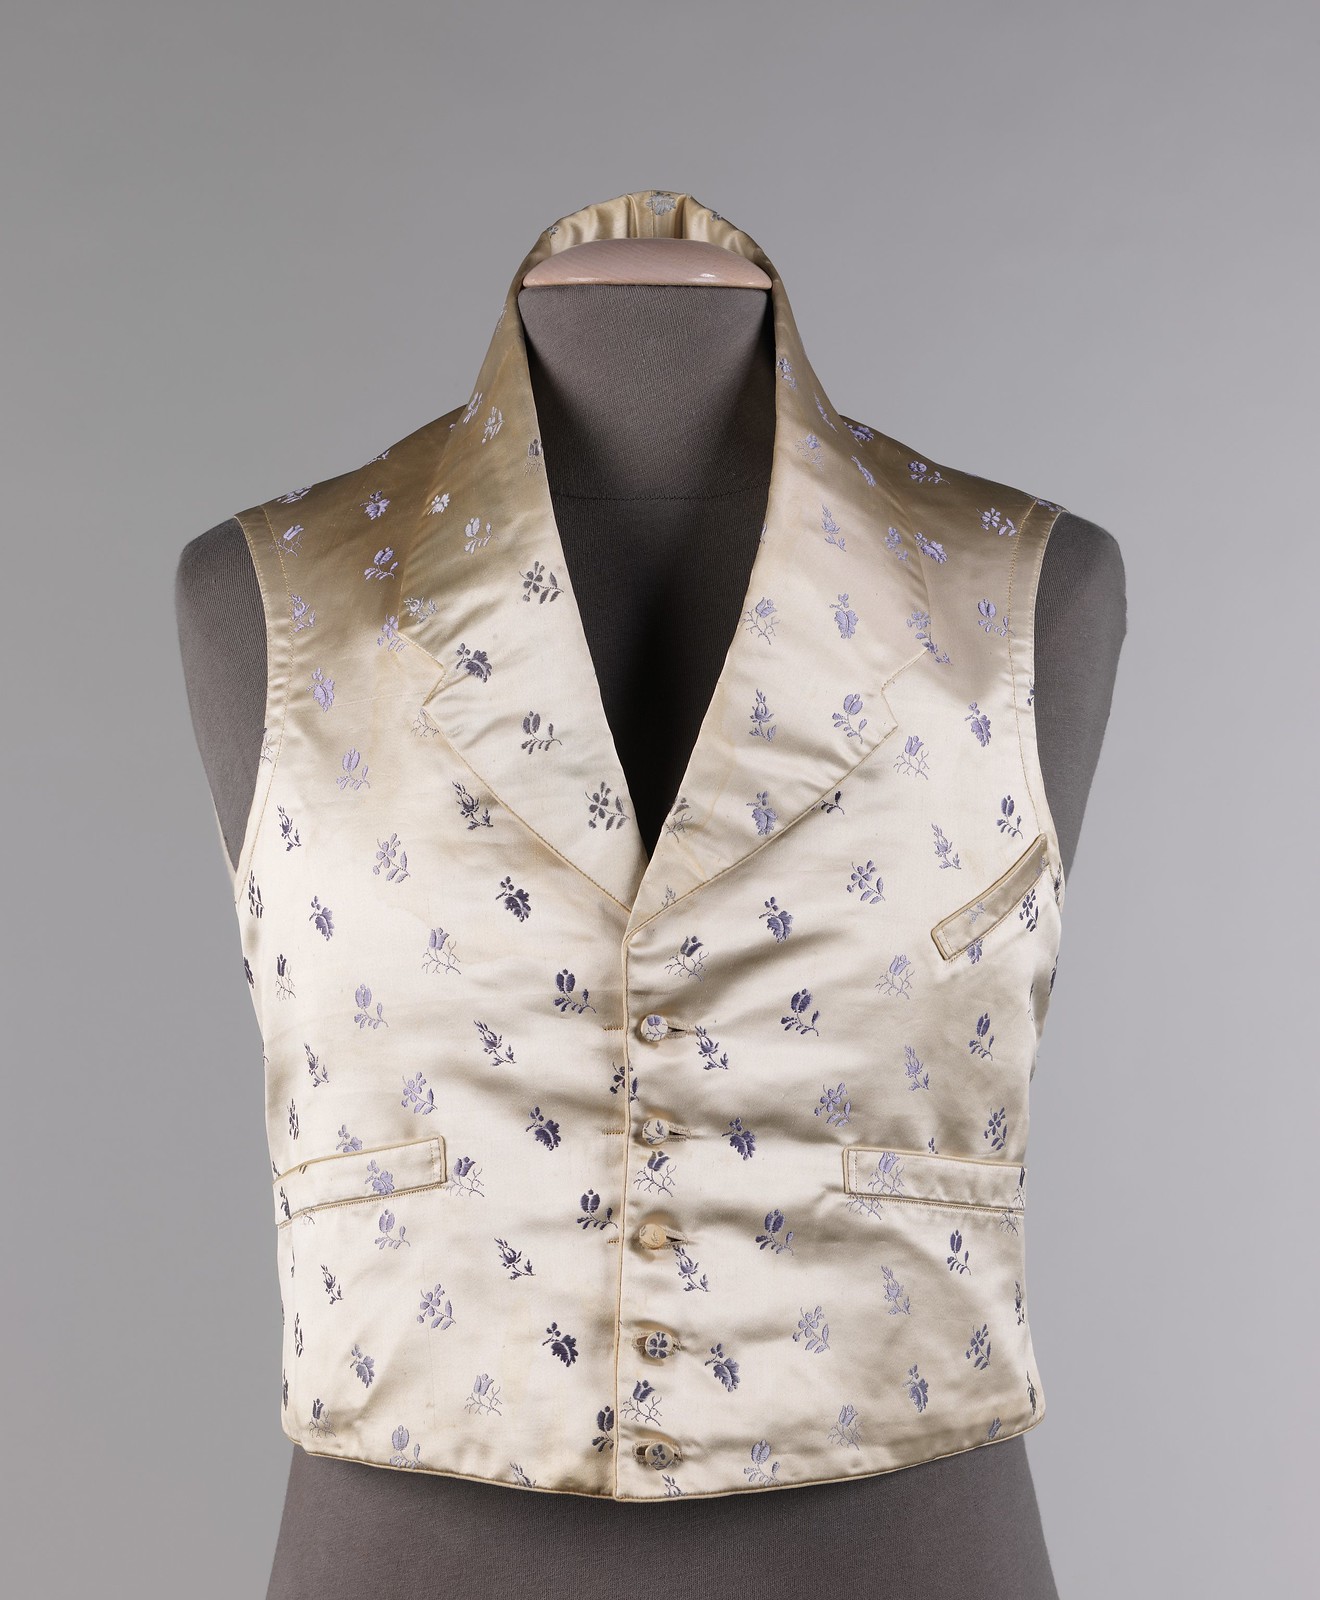 1830. American. silk, cotton. metmuseum